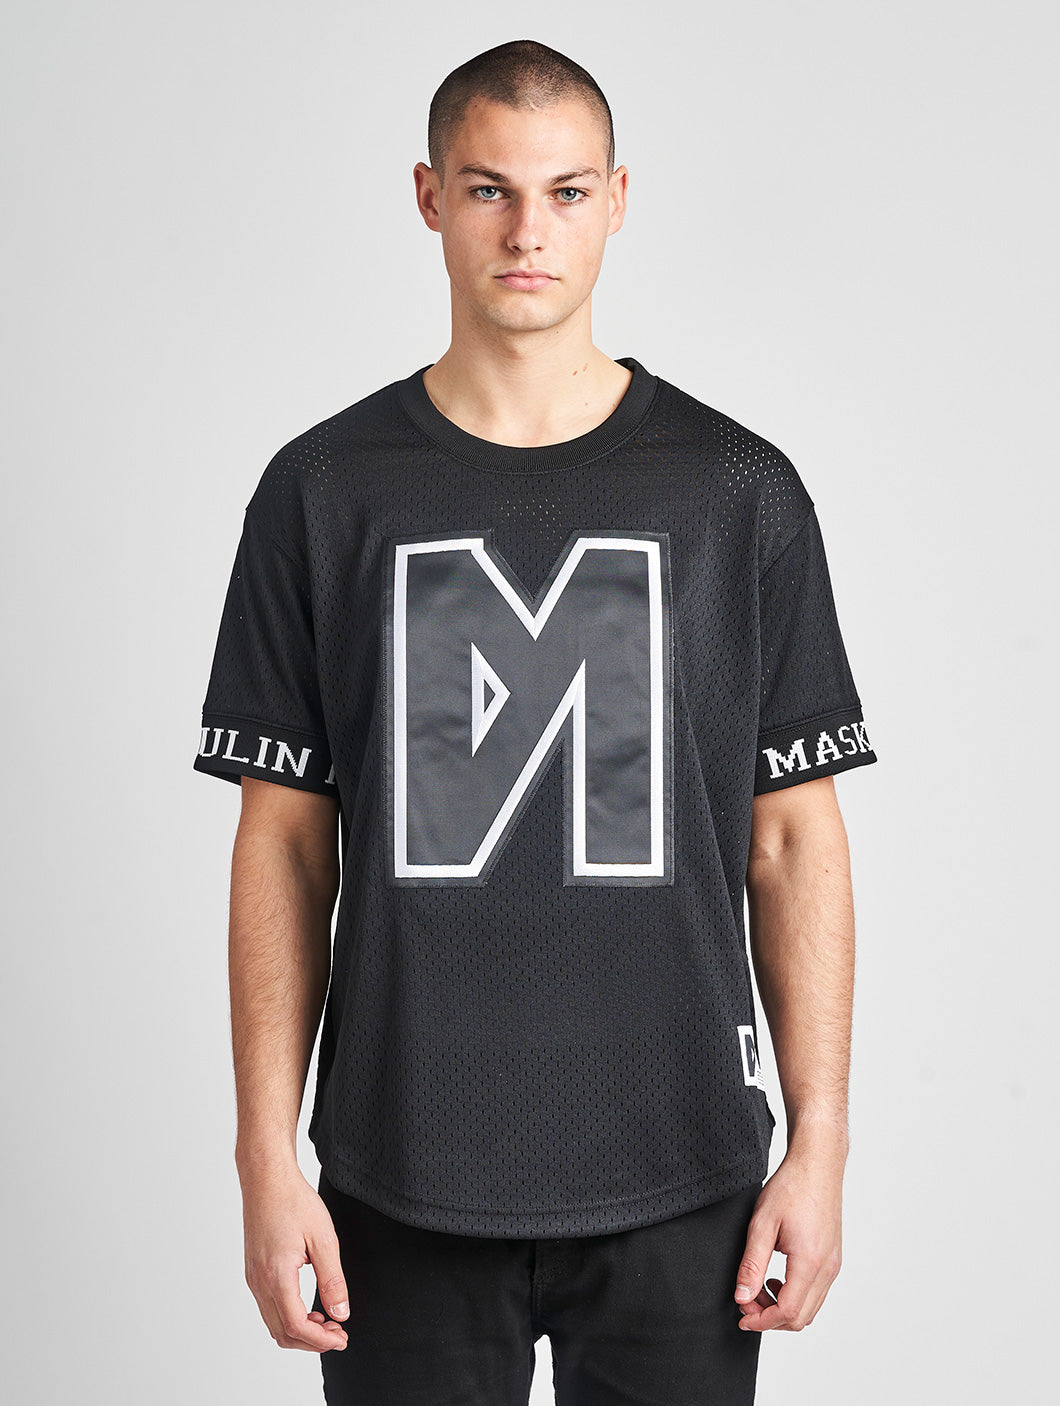 Maskulin Black & White Logo Mesh Crewneck T-Shirt – Maskulin.de Shop